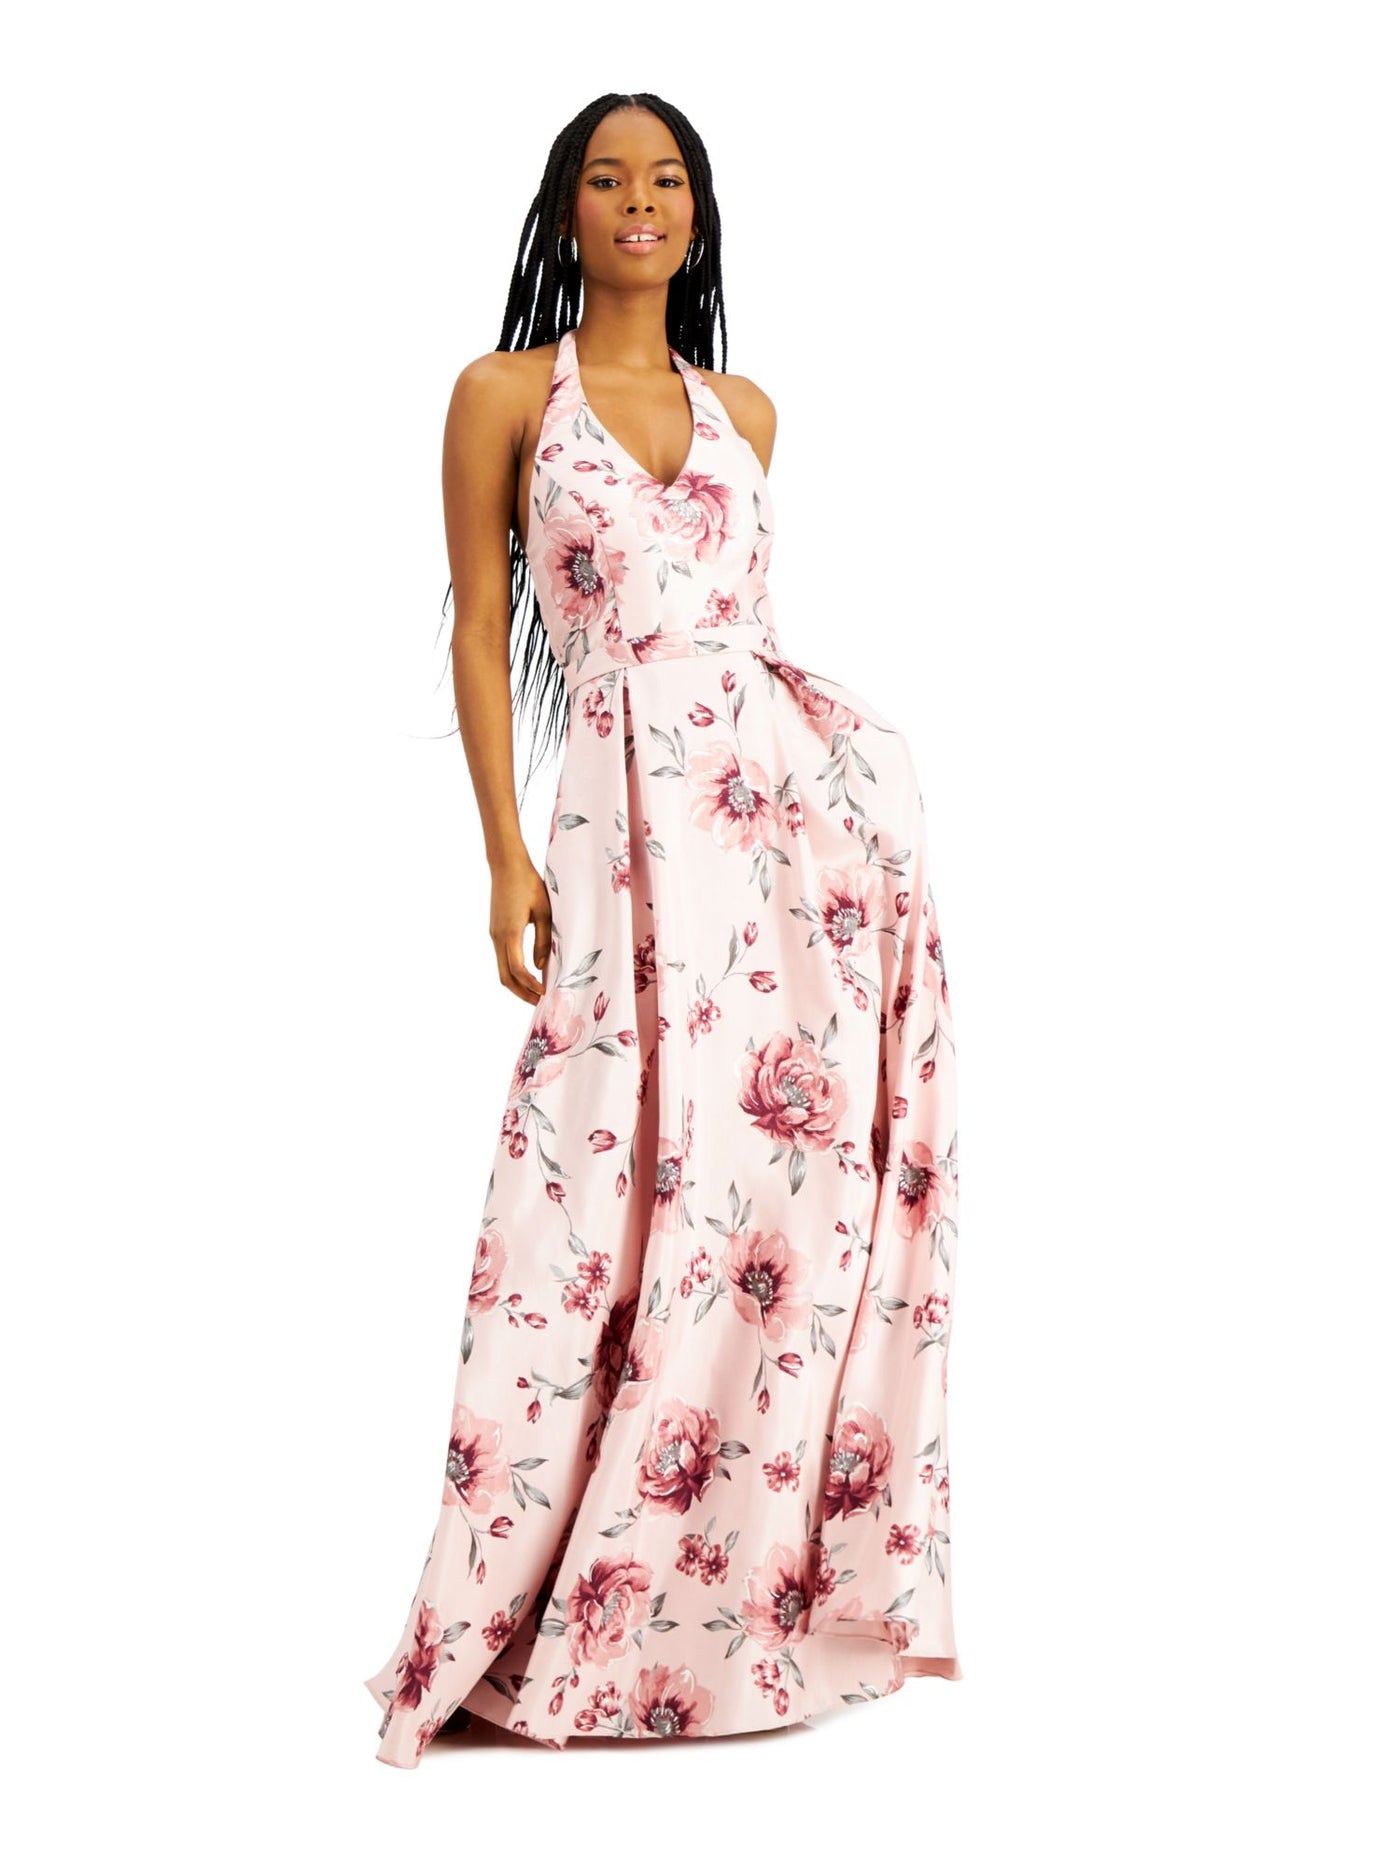 CITY STUDIO Womens Pink Floral Sleeveless Halter Full-Length  Fit + Flare Prom Dress Juniors 0